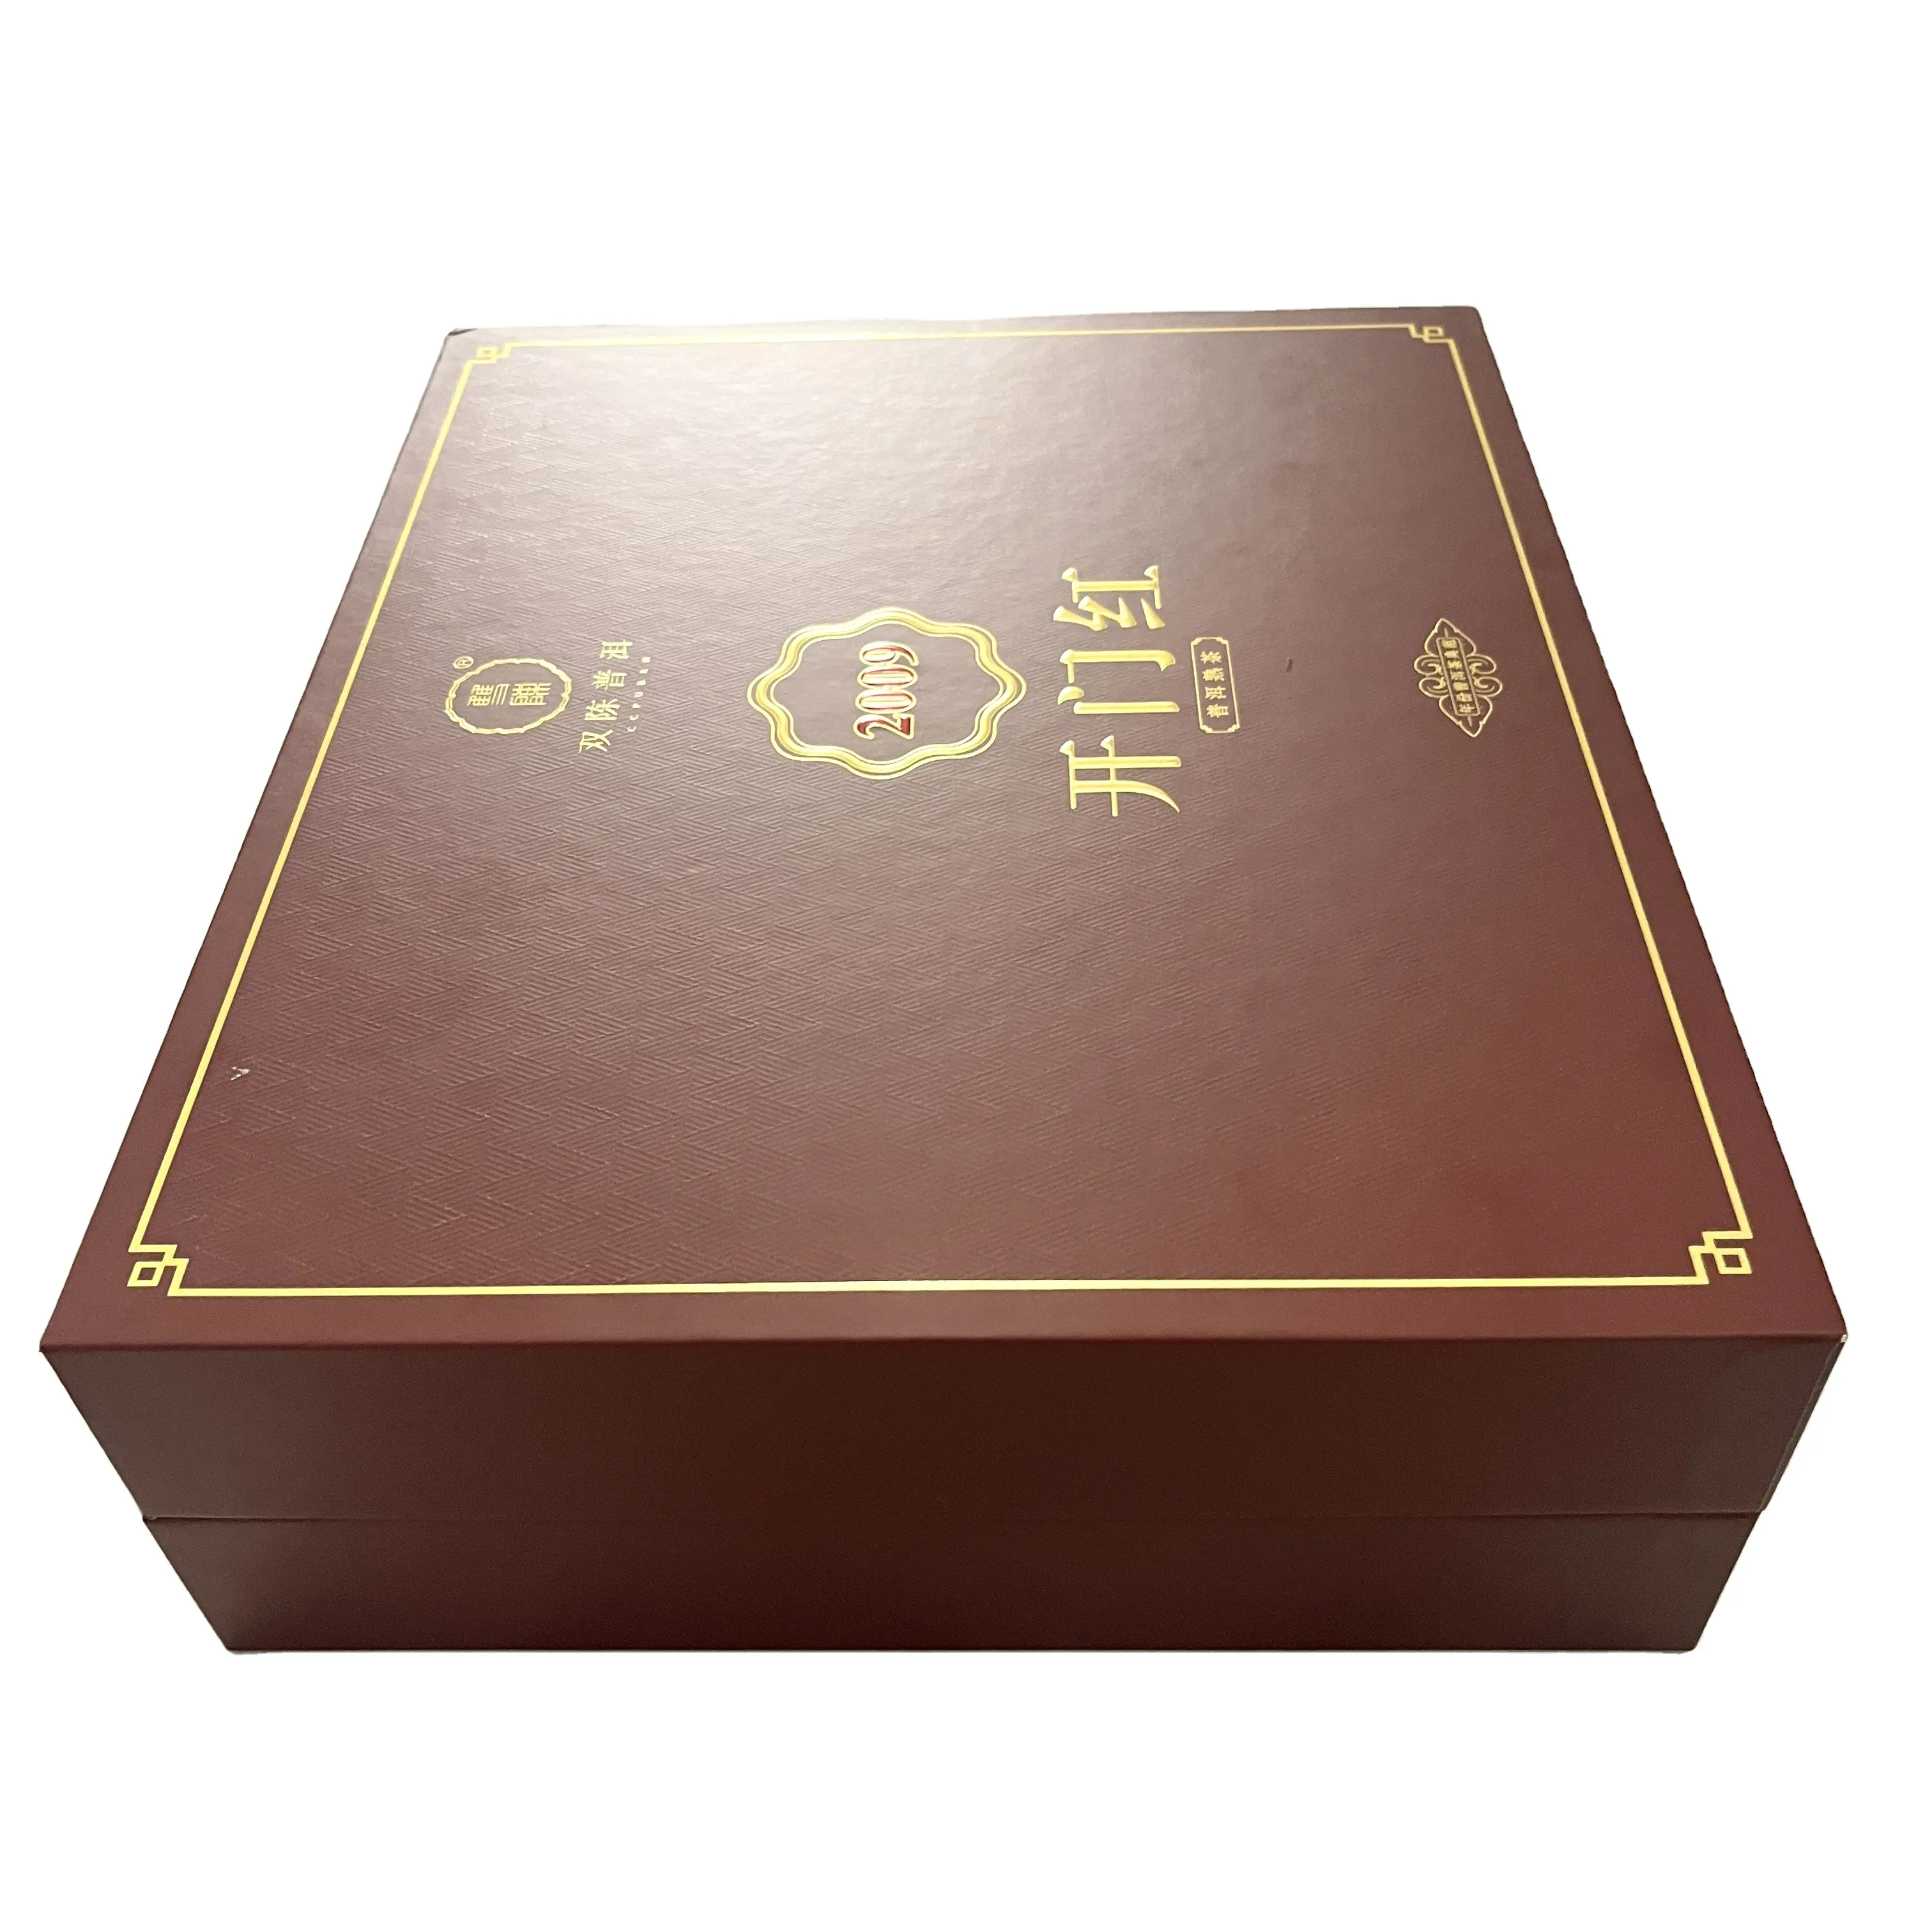 Pu'er tea tea box  brick red box  stable and atmospheric high-end gift box